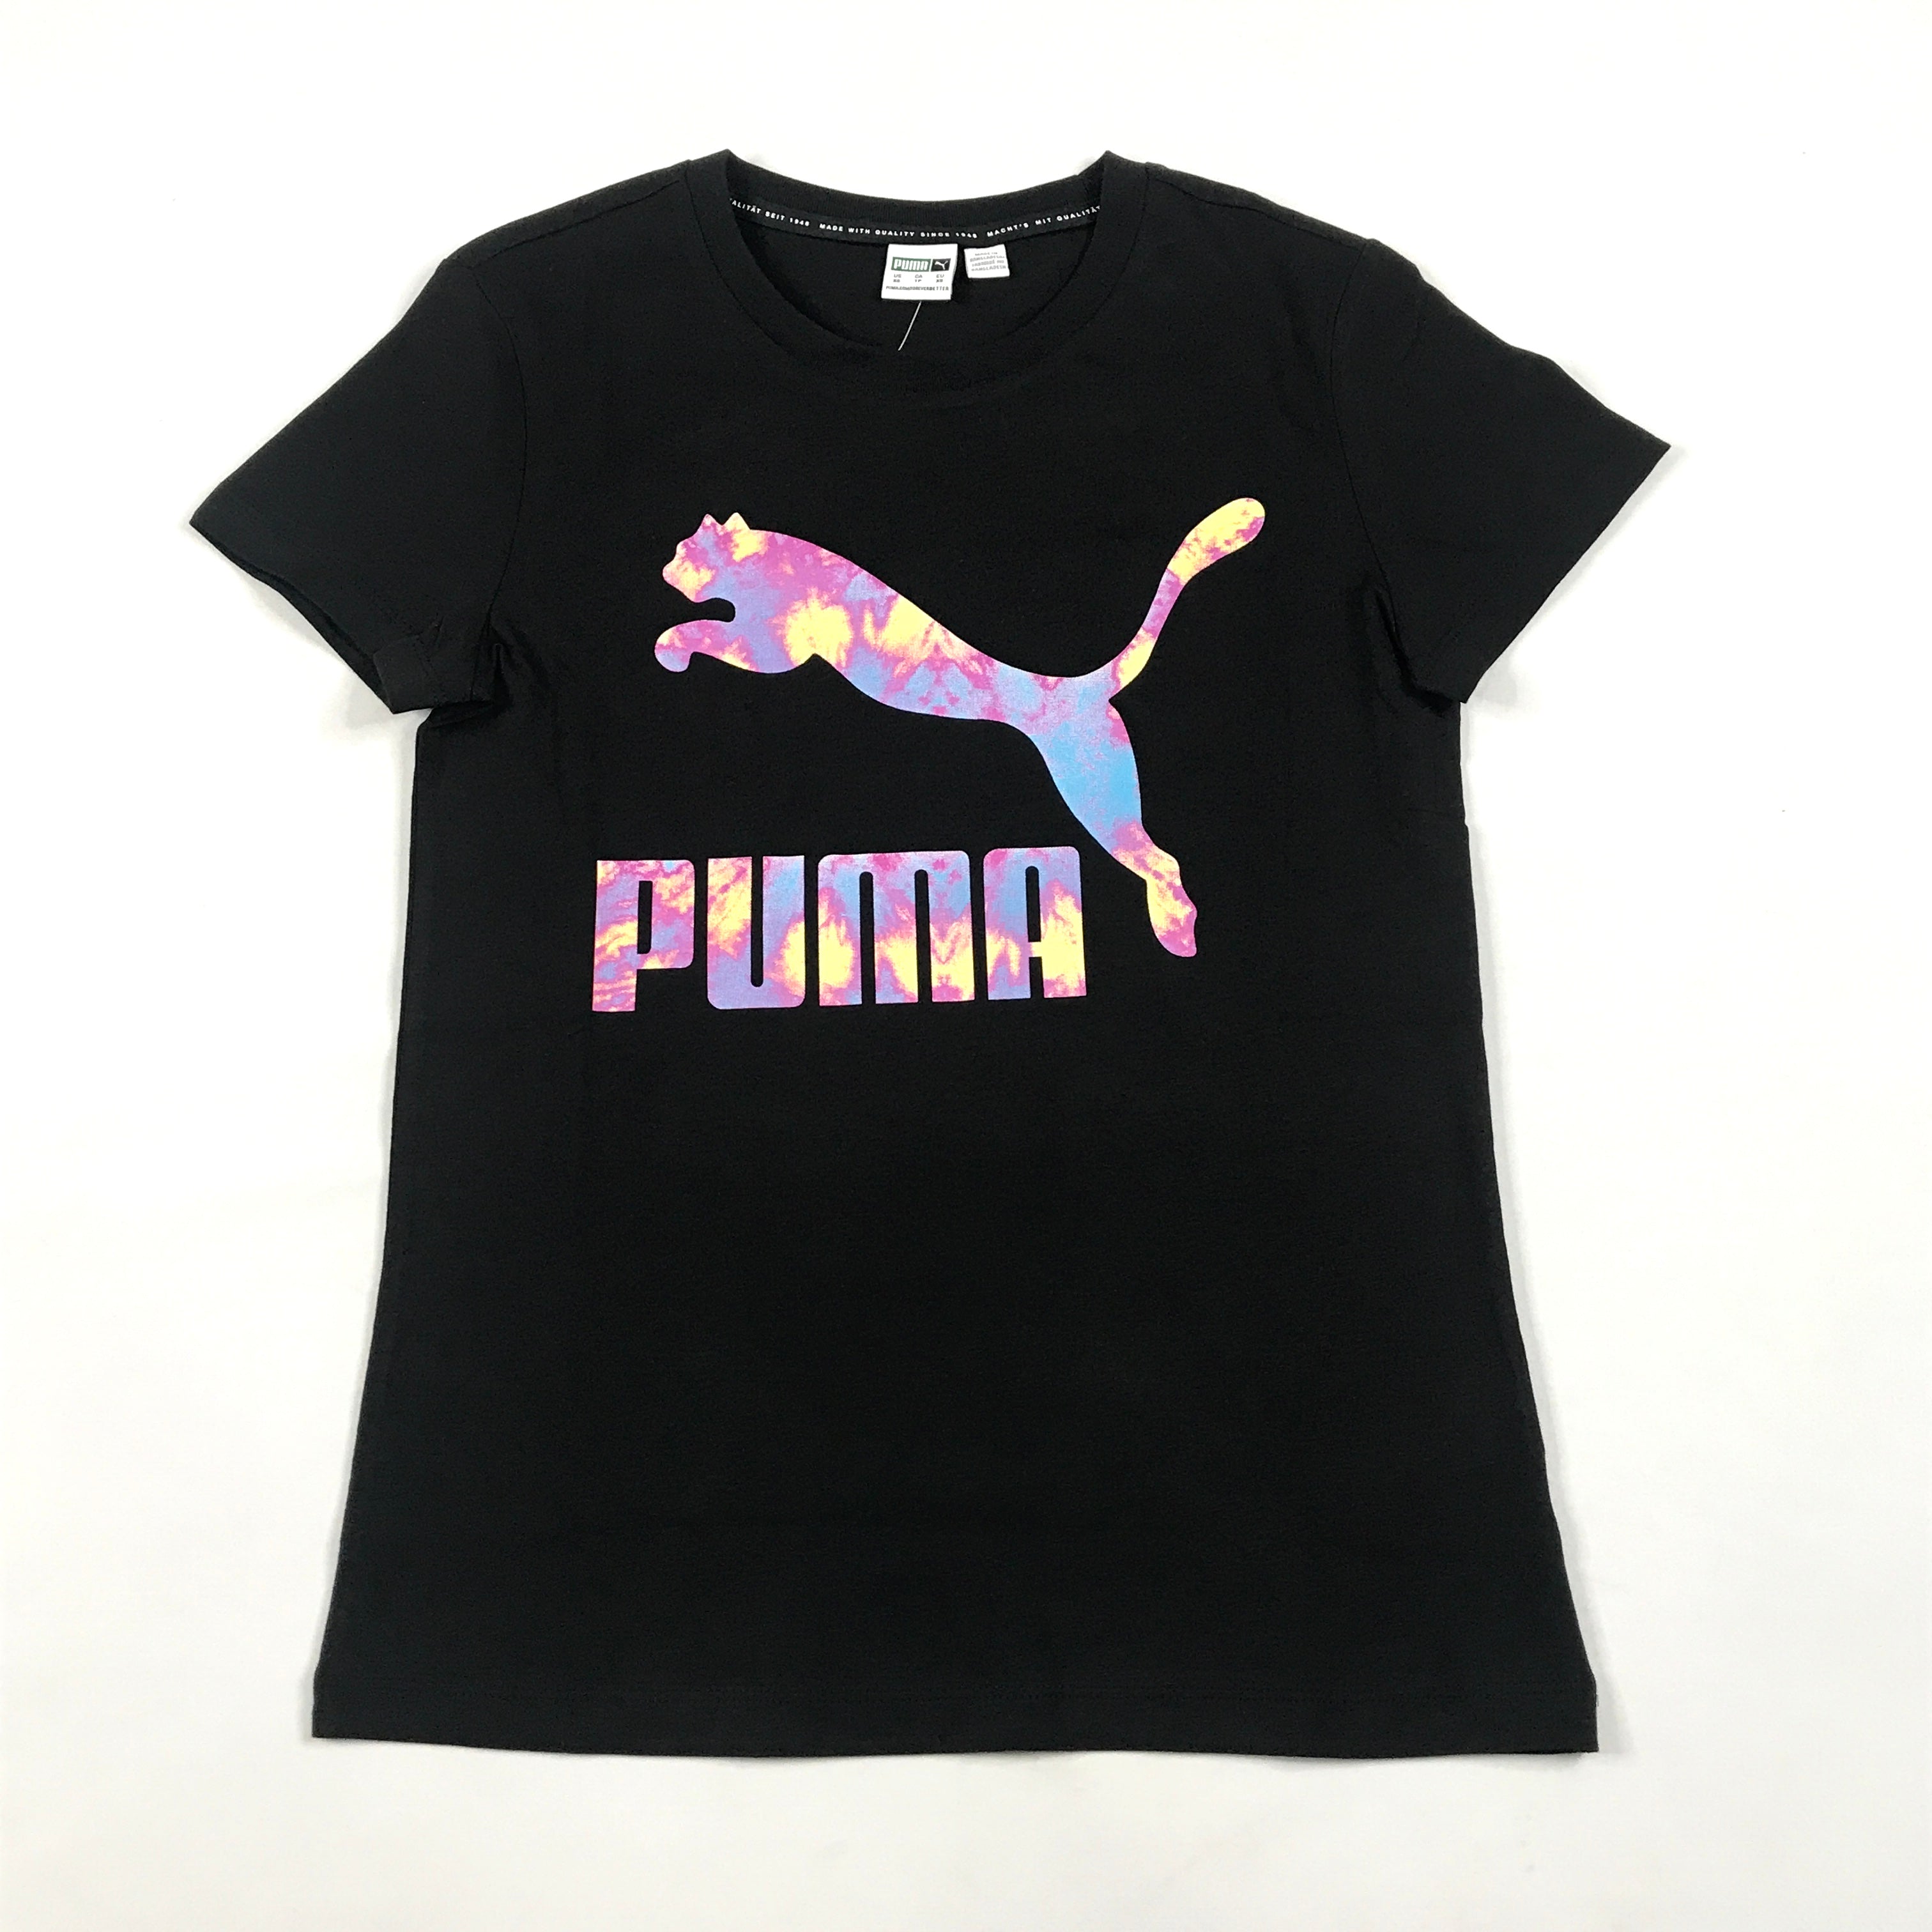 Puma graphic tee streetwear in black-tie dye cat